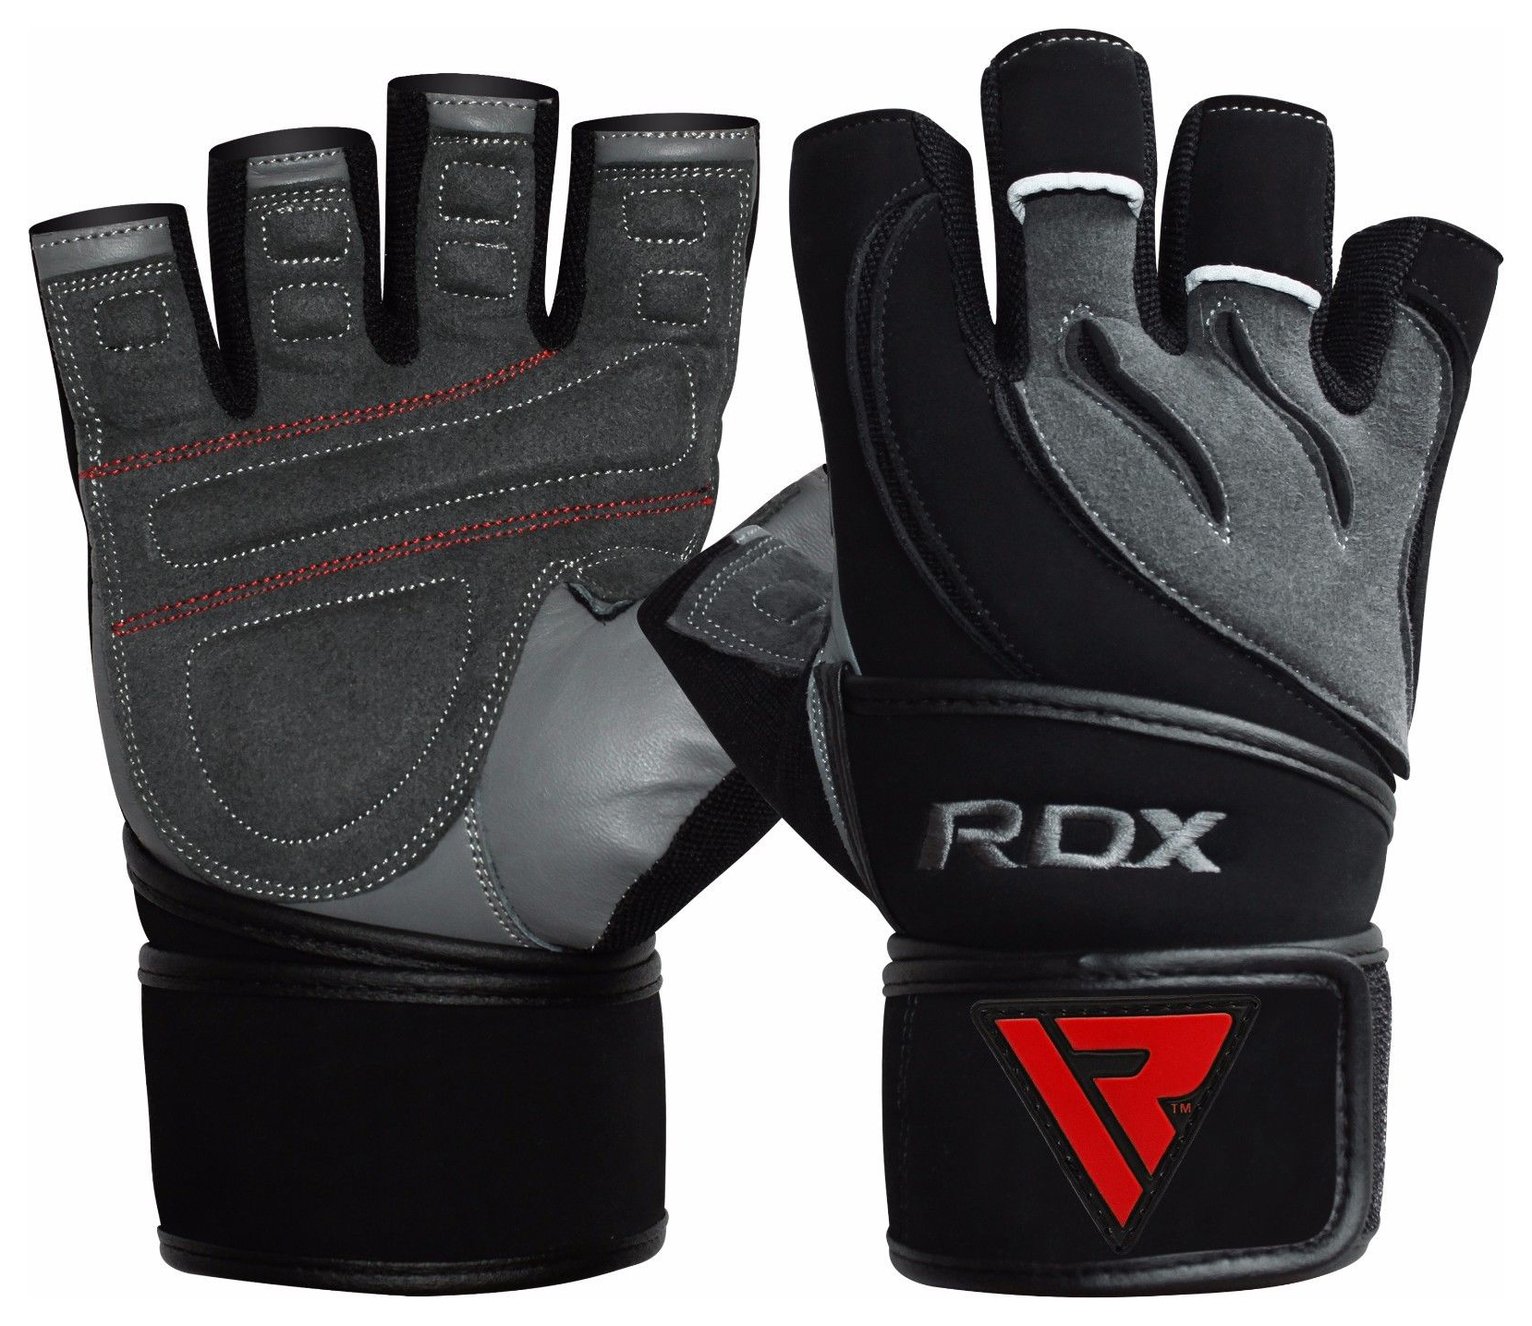 RDX Medium/Large Fitness Gloves